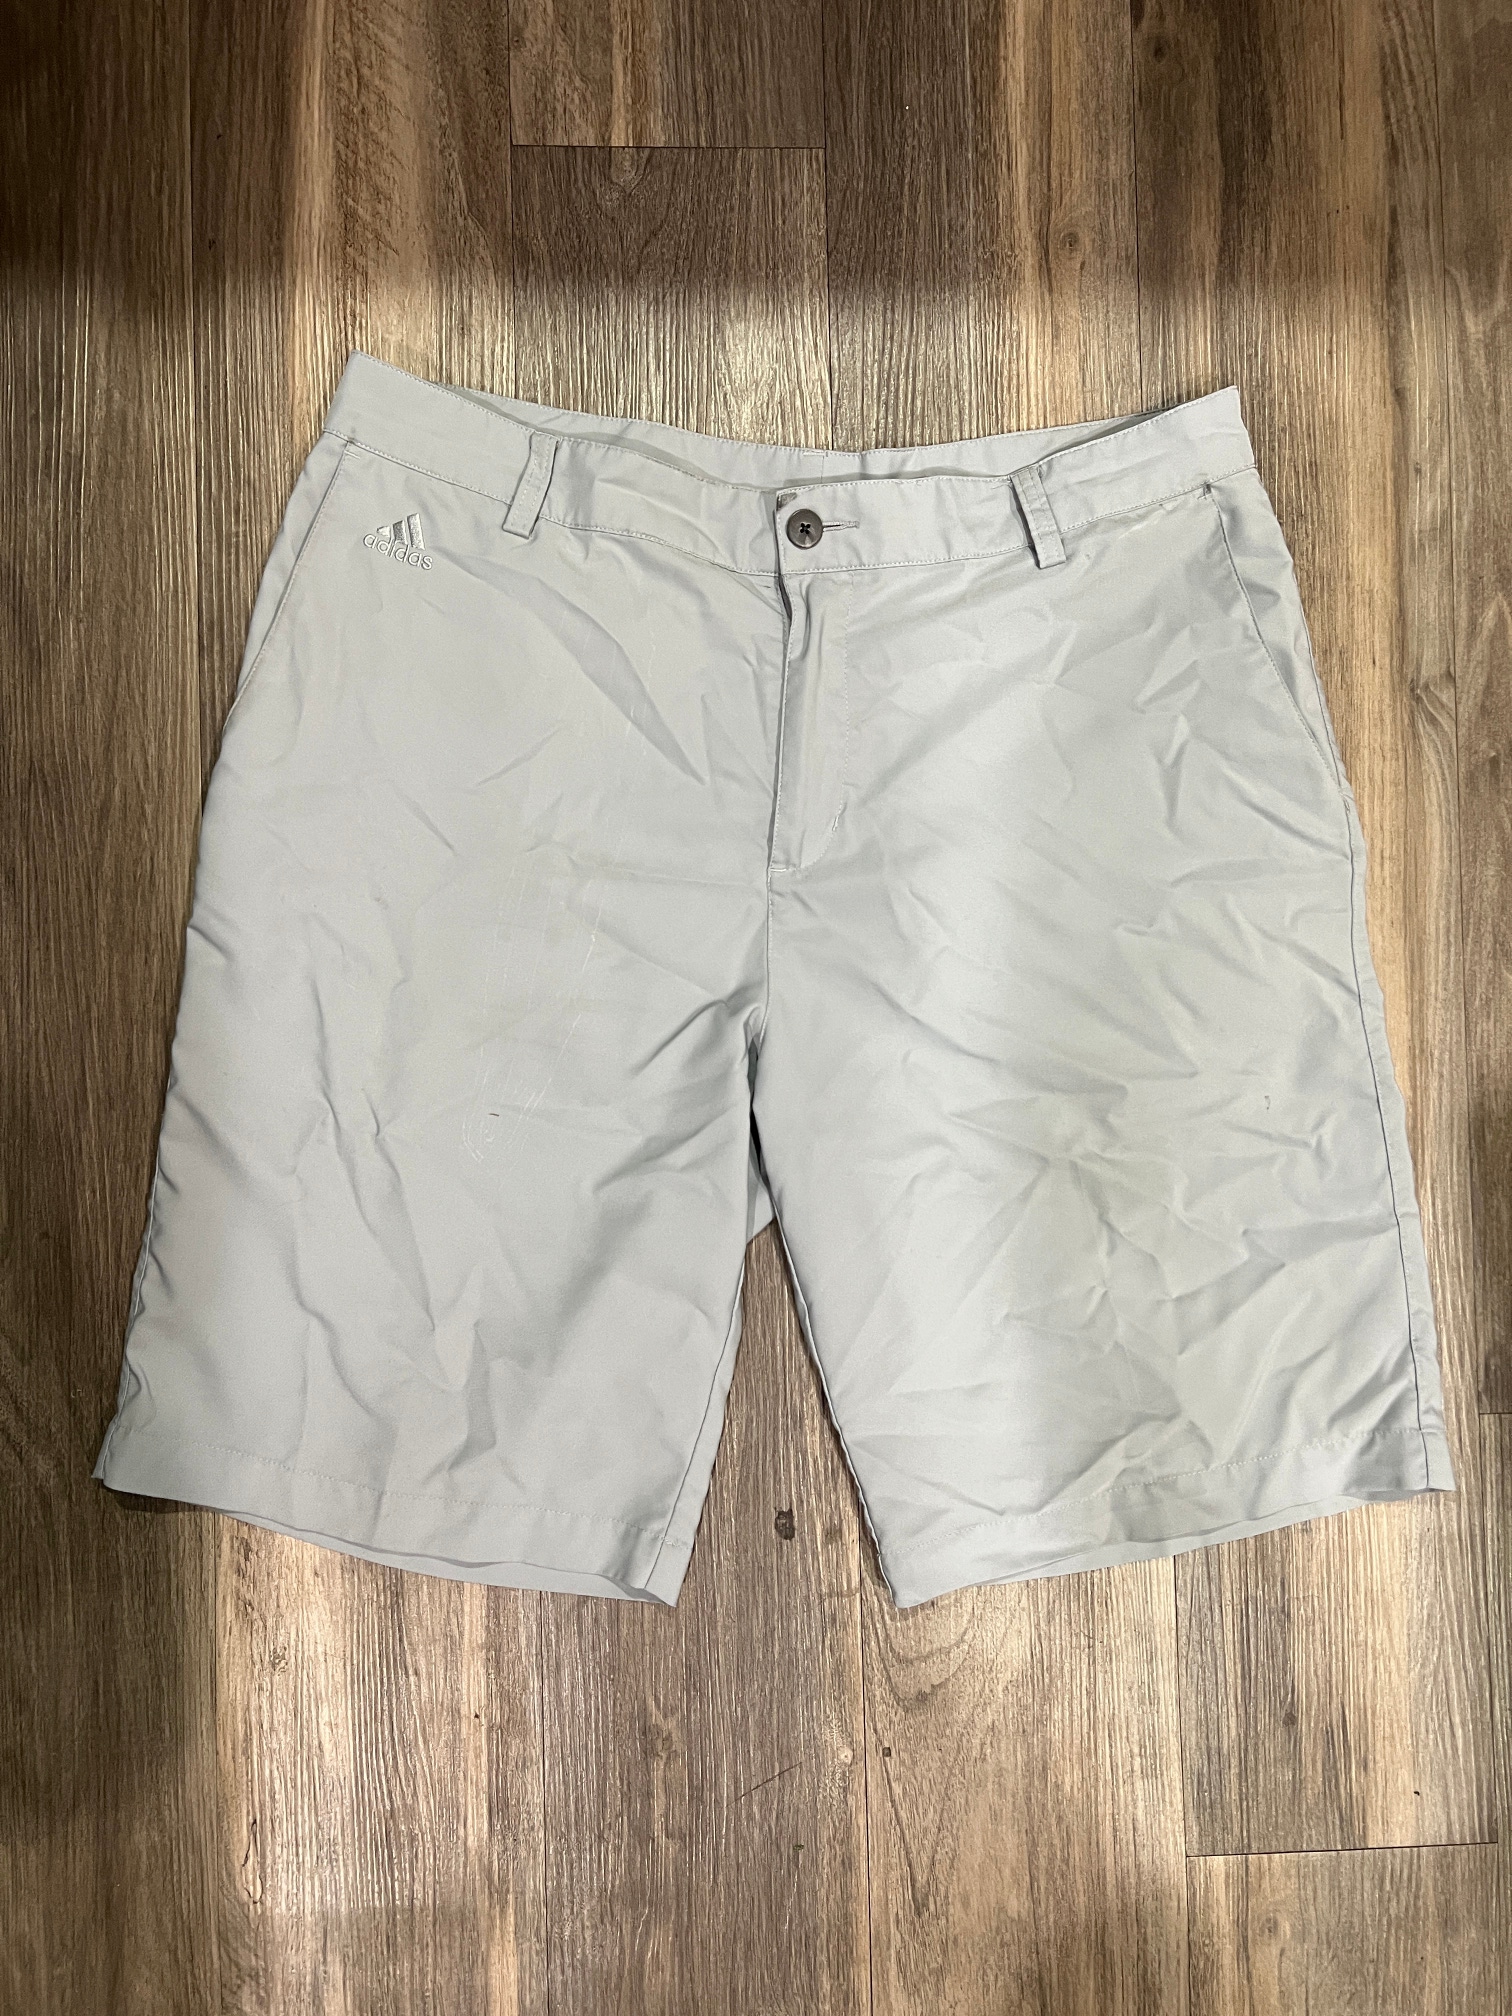 Gray Men's Adidas Shorts - size 34